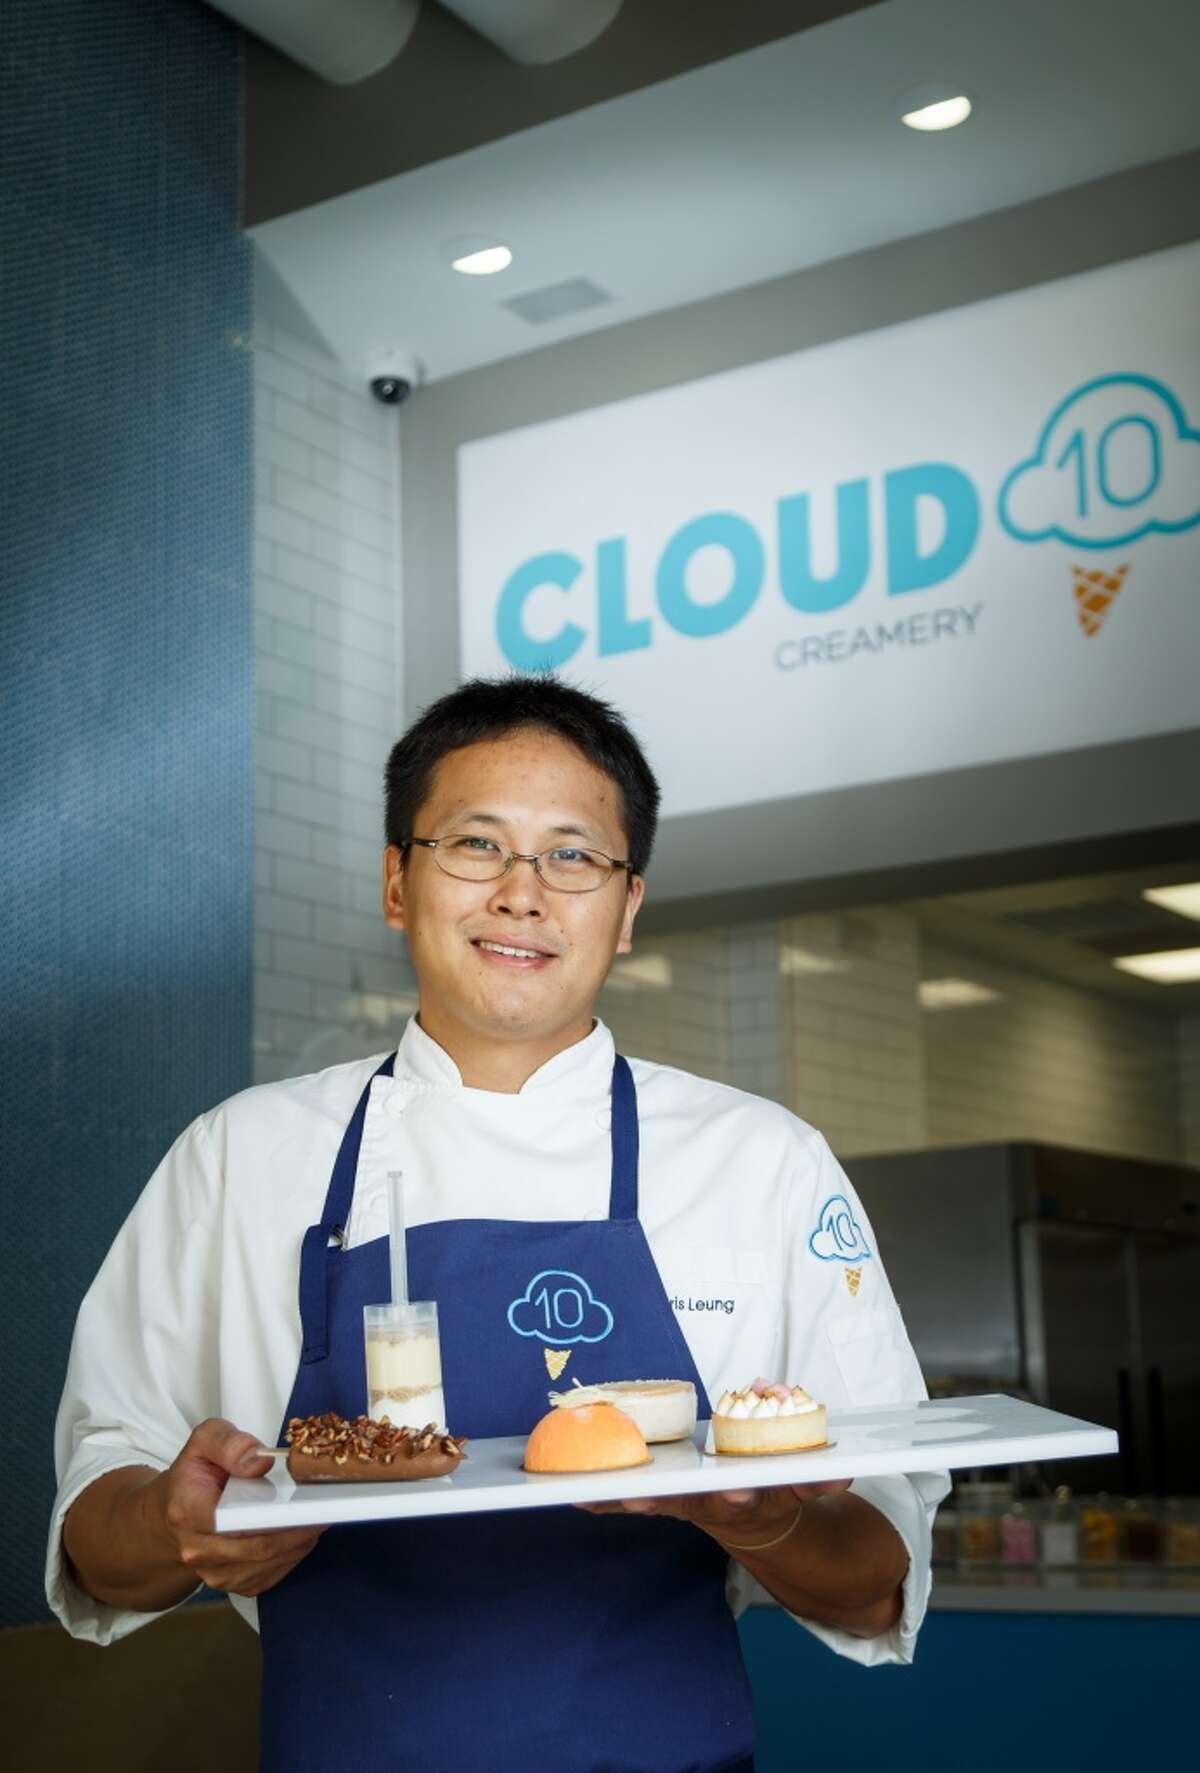 Chris Leung of Cloud 10 Creamery